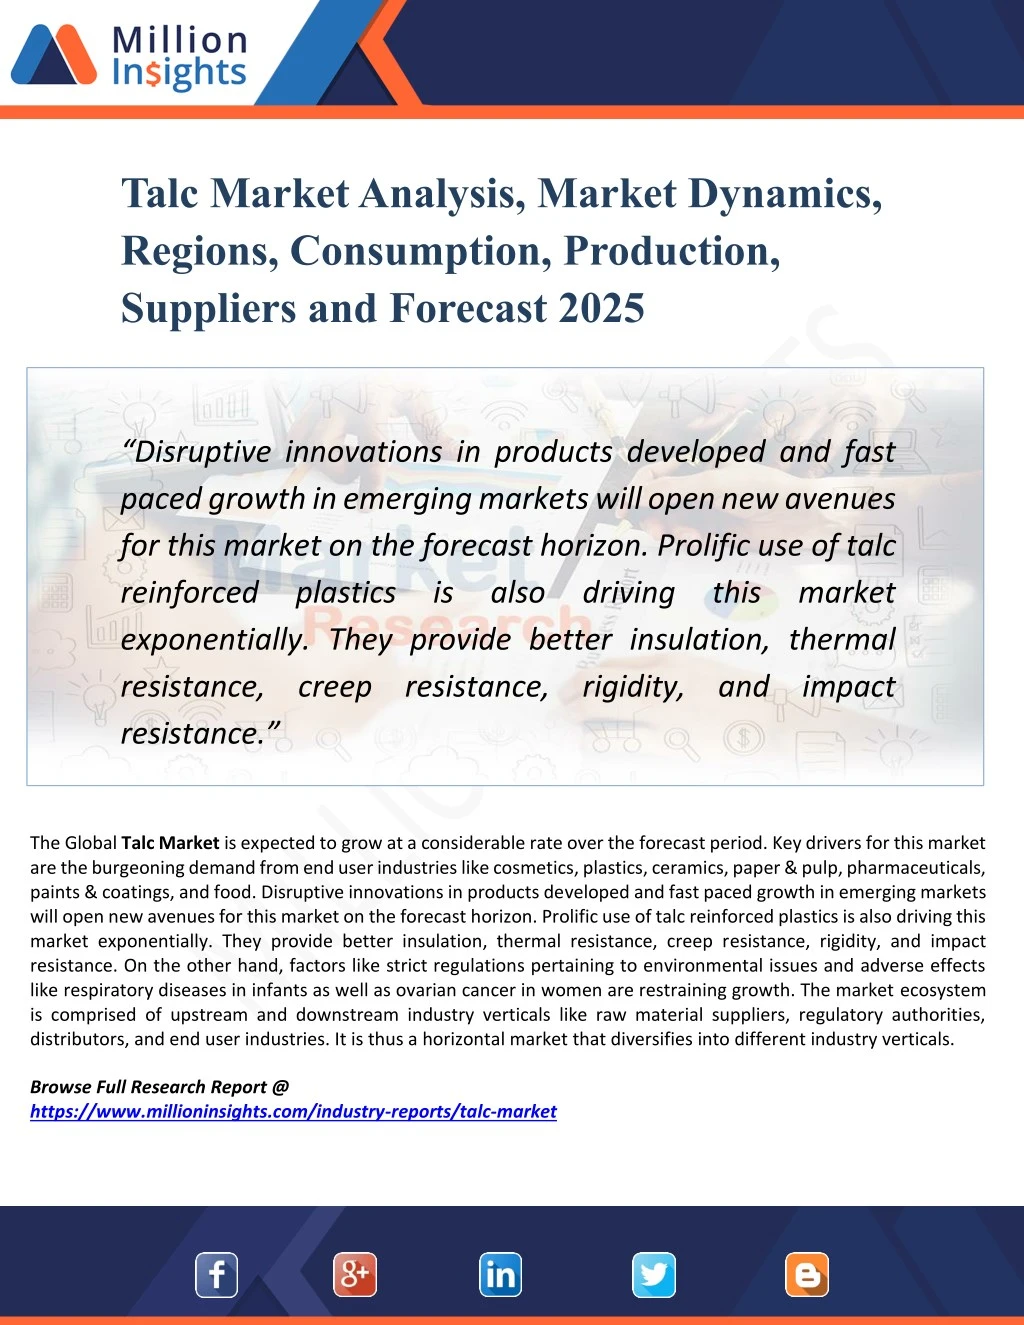 talc market analysis market dynamics regions